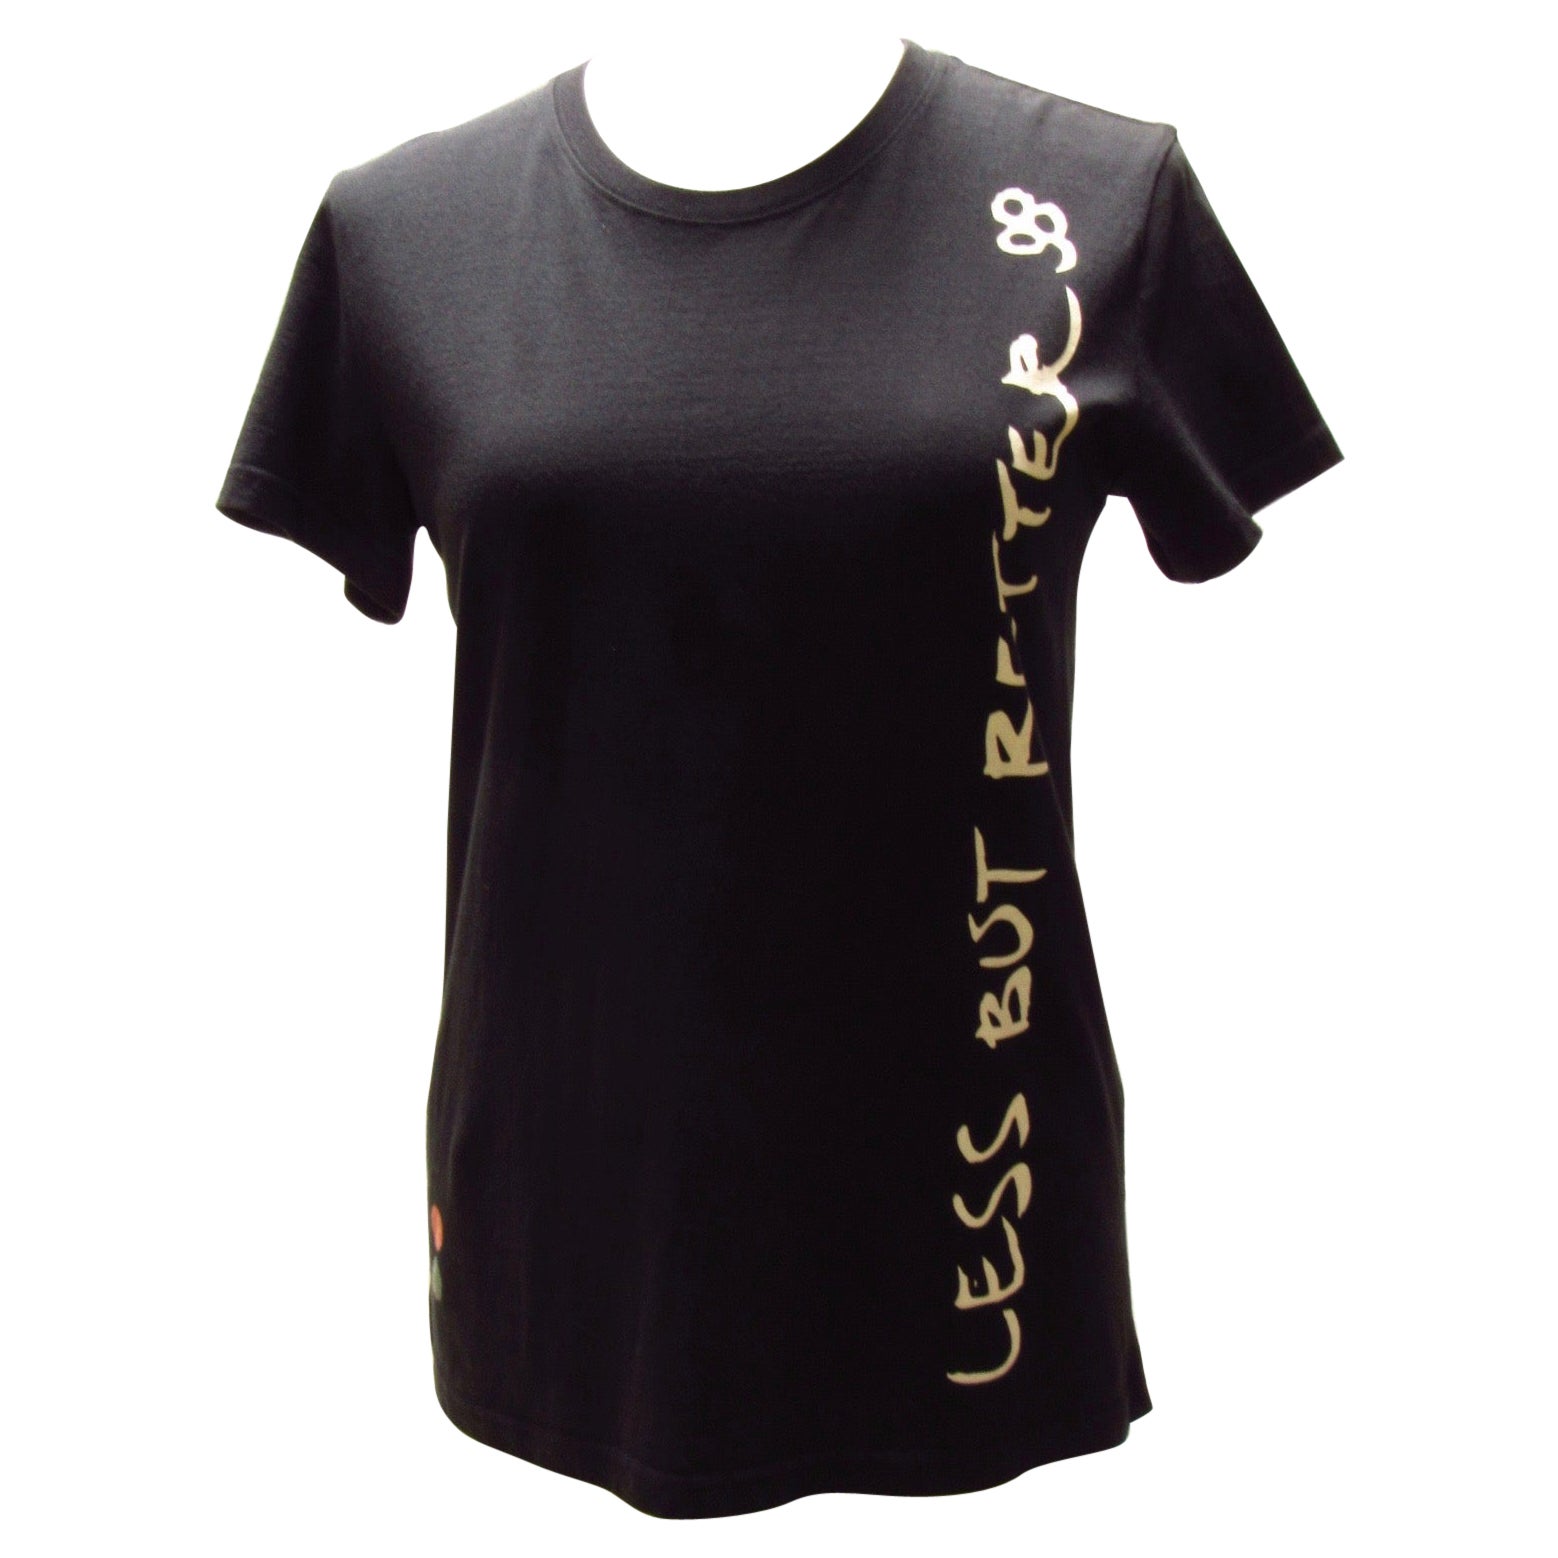 Undercover - T-shirt noir « Less But Better » en vente